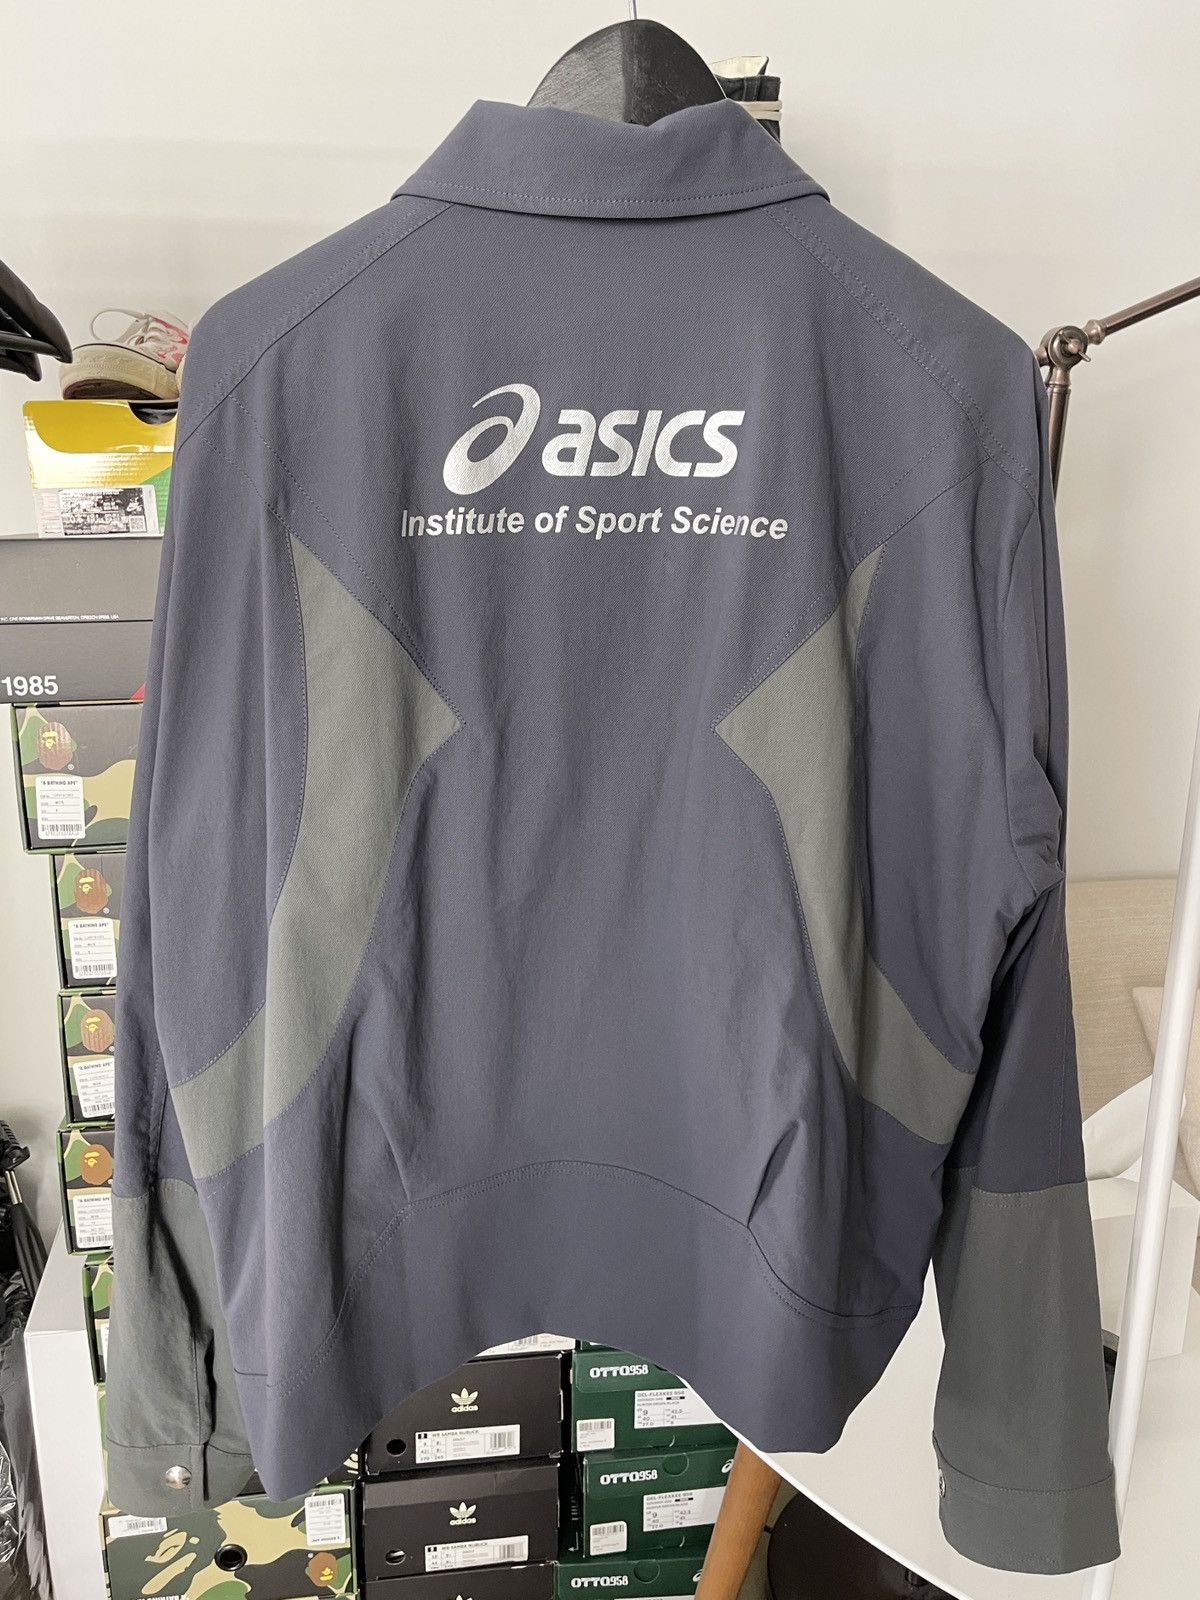 ARCHIVAL! Kiko Kostadinov x ASICS ISS Uniform Jacket - 1